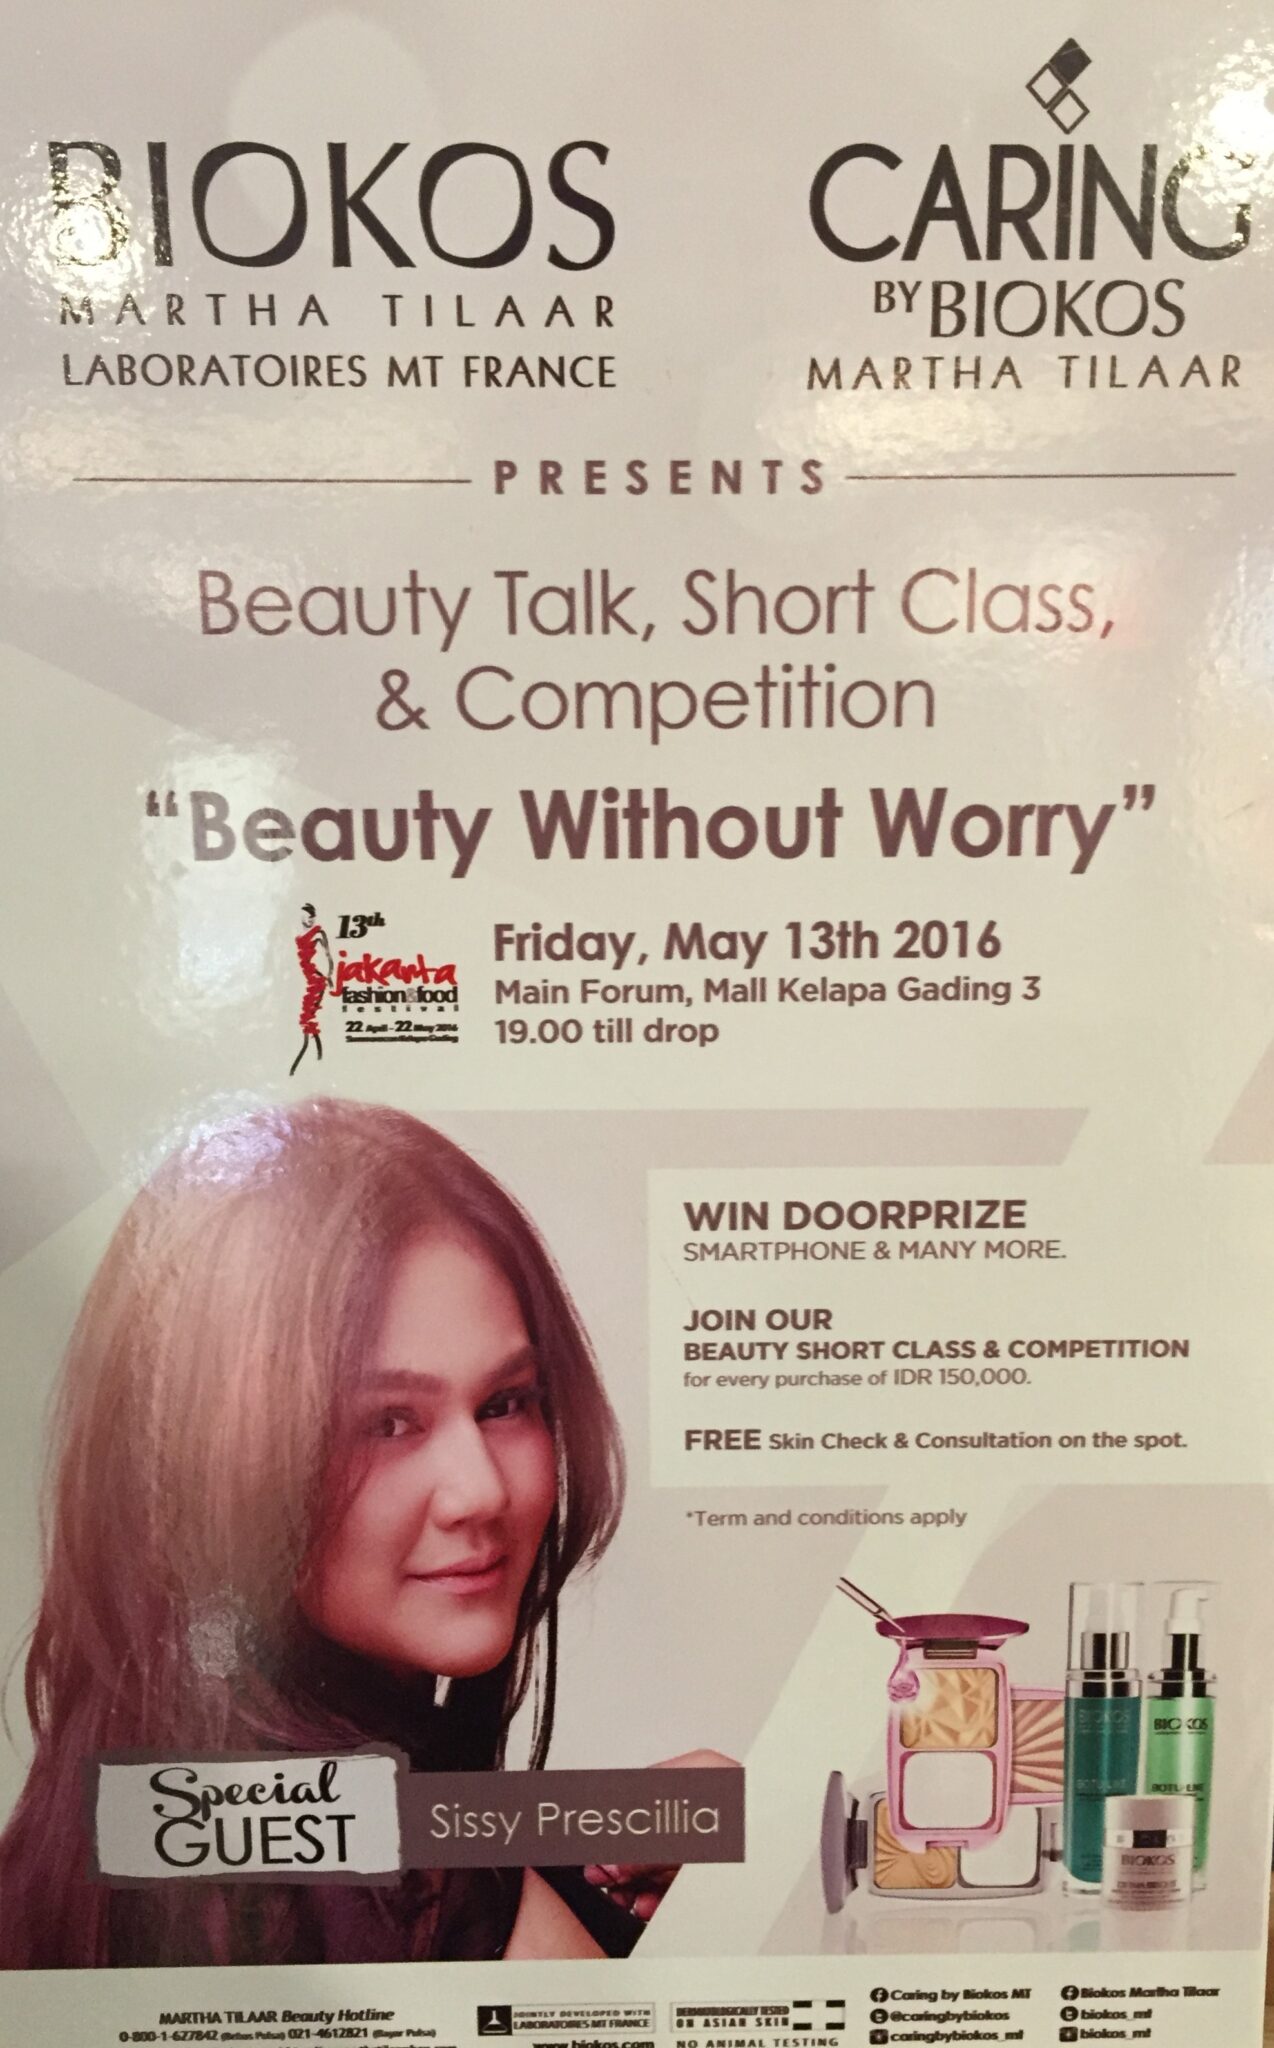 Beuaty Talkshow, Beauty Class, Beuaty, Skin Care, Caring, Biokos